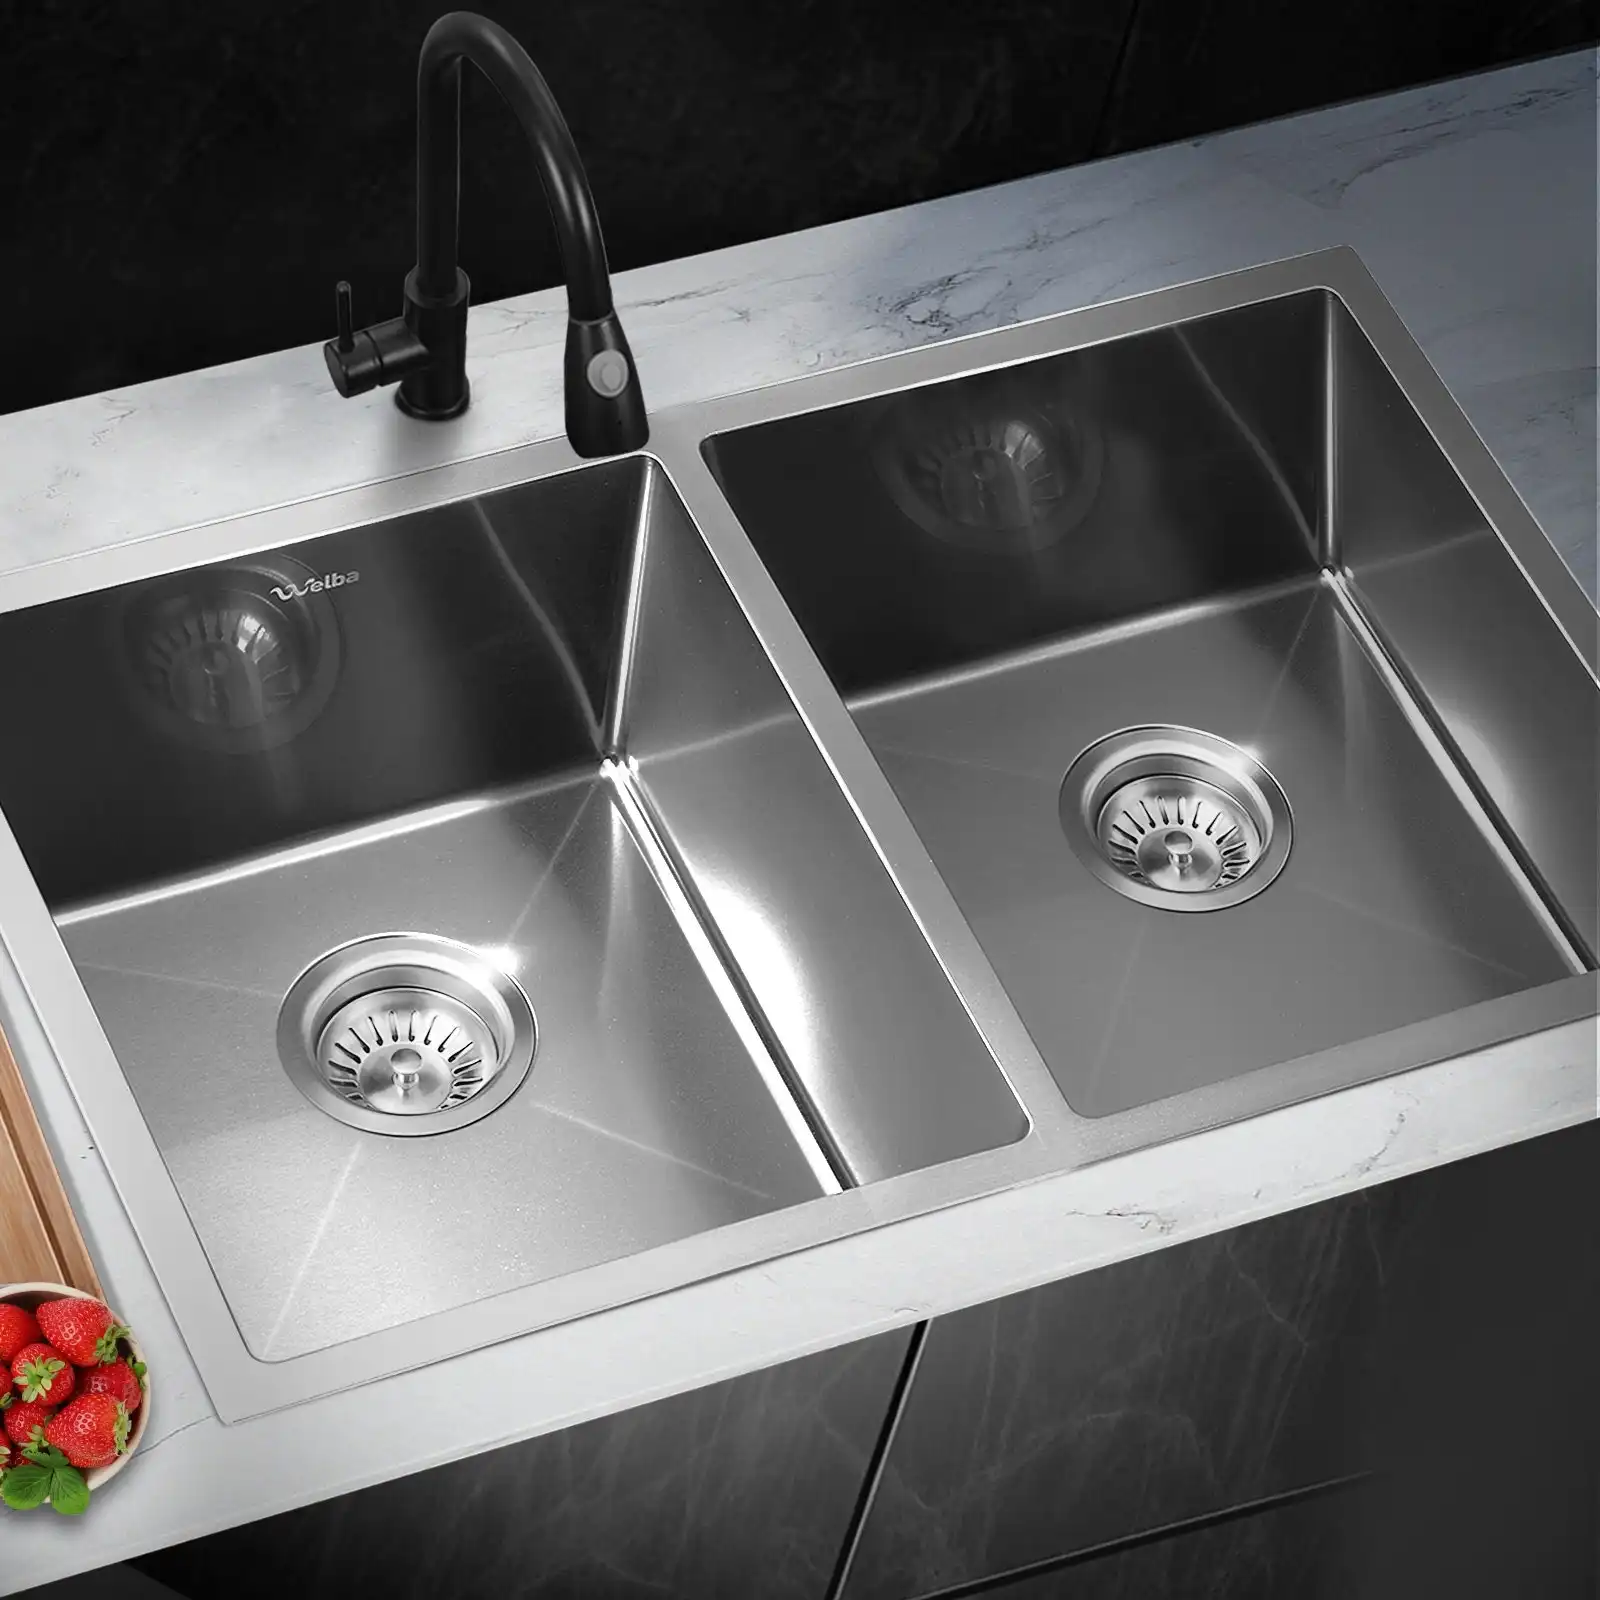 Welba Kitchen Sink Stainless Steel Bathroom Laundry Basin Double Silver 76X44CM